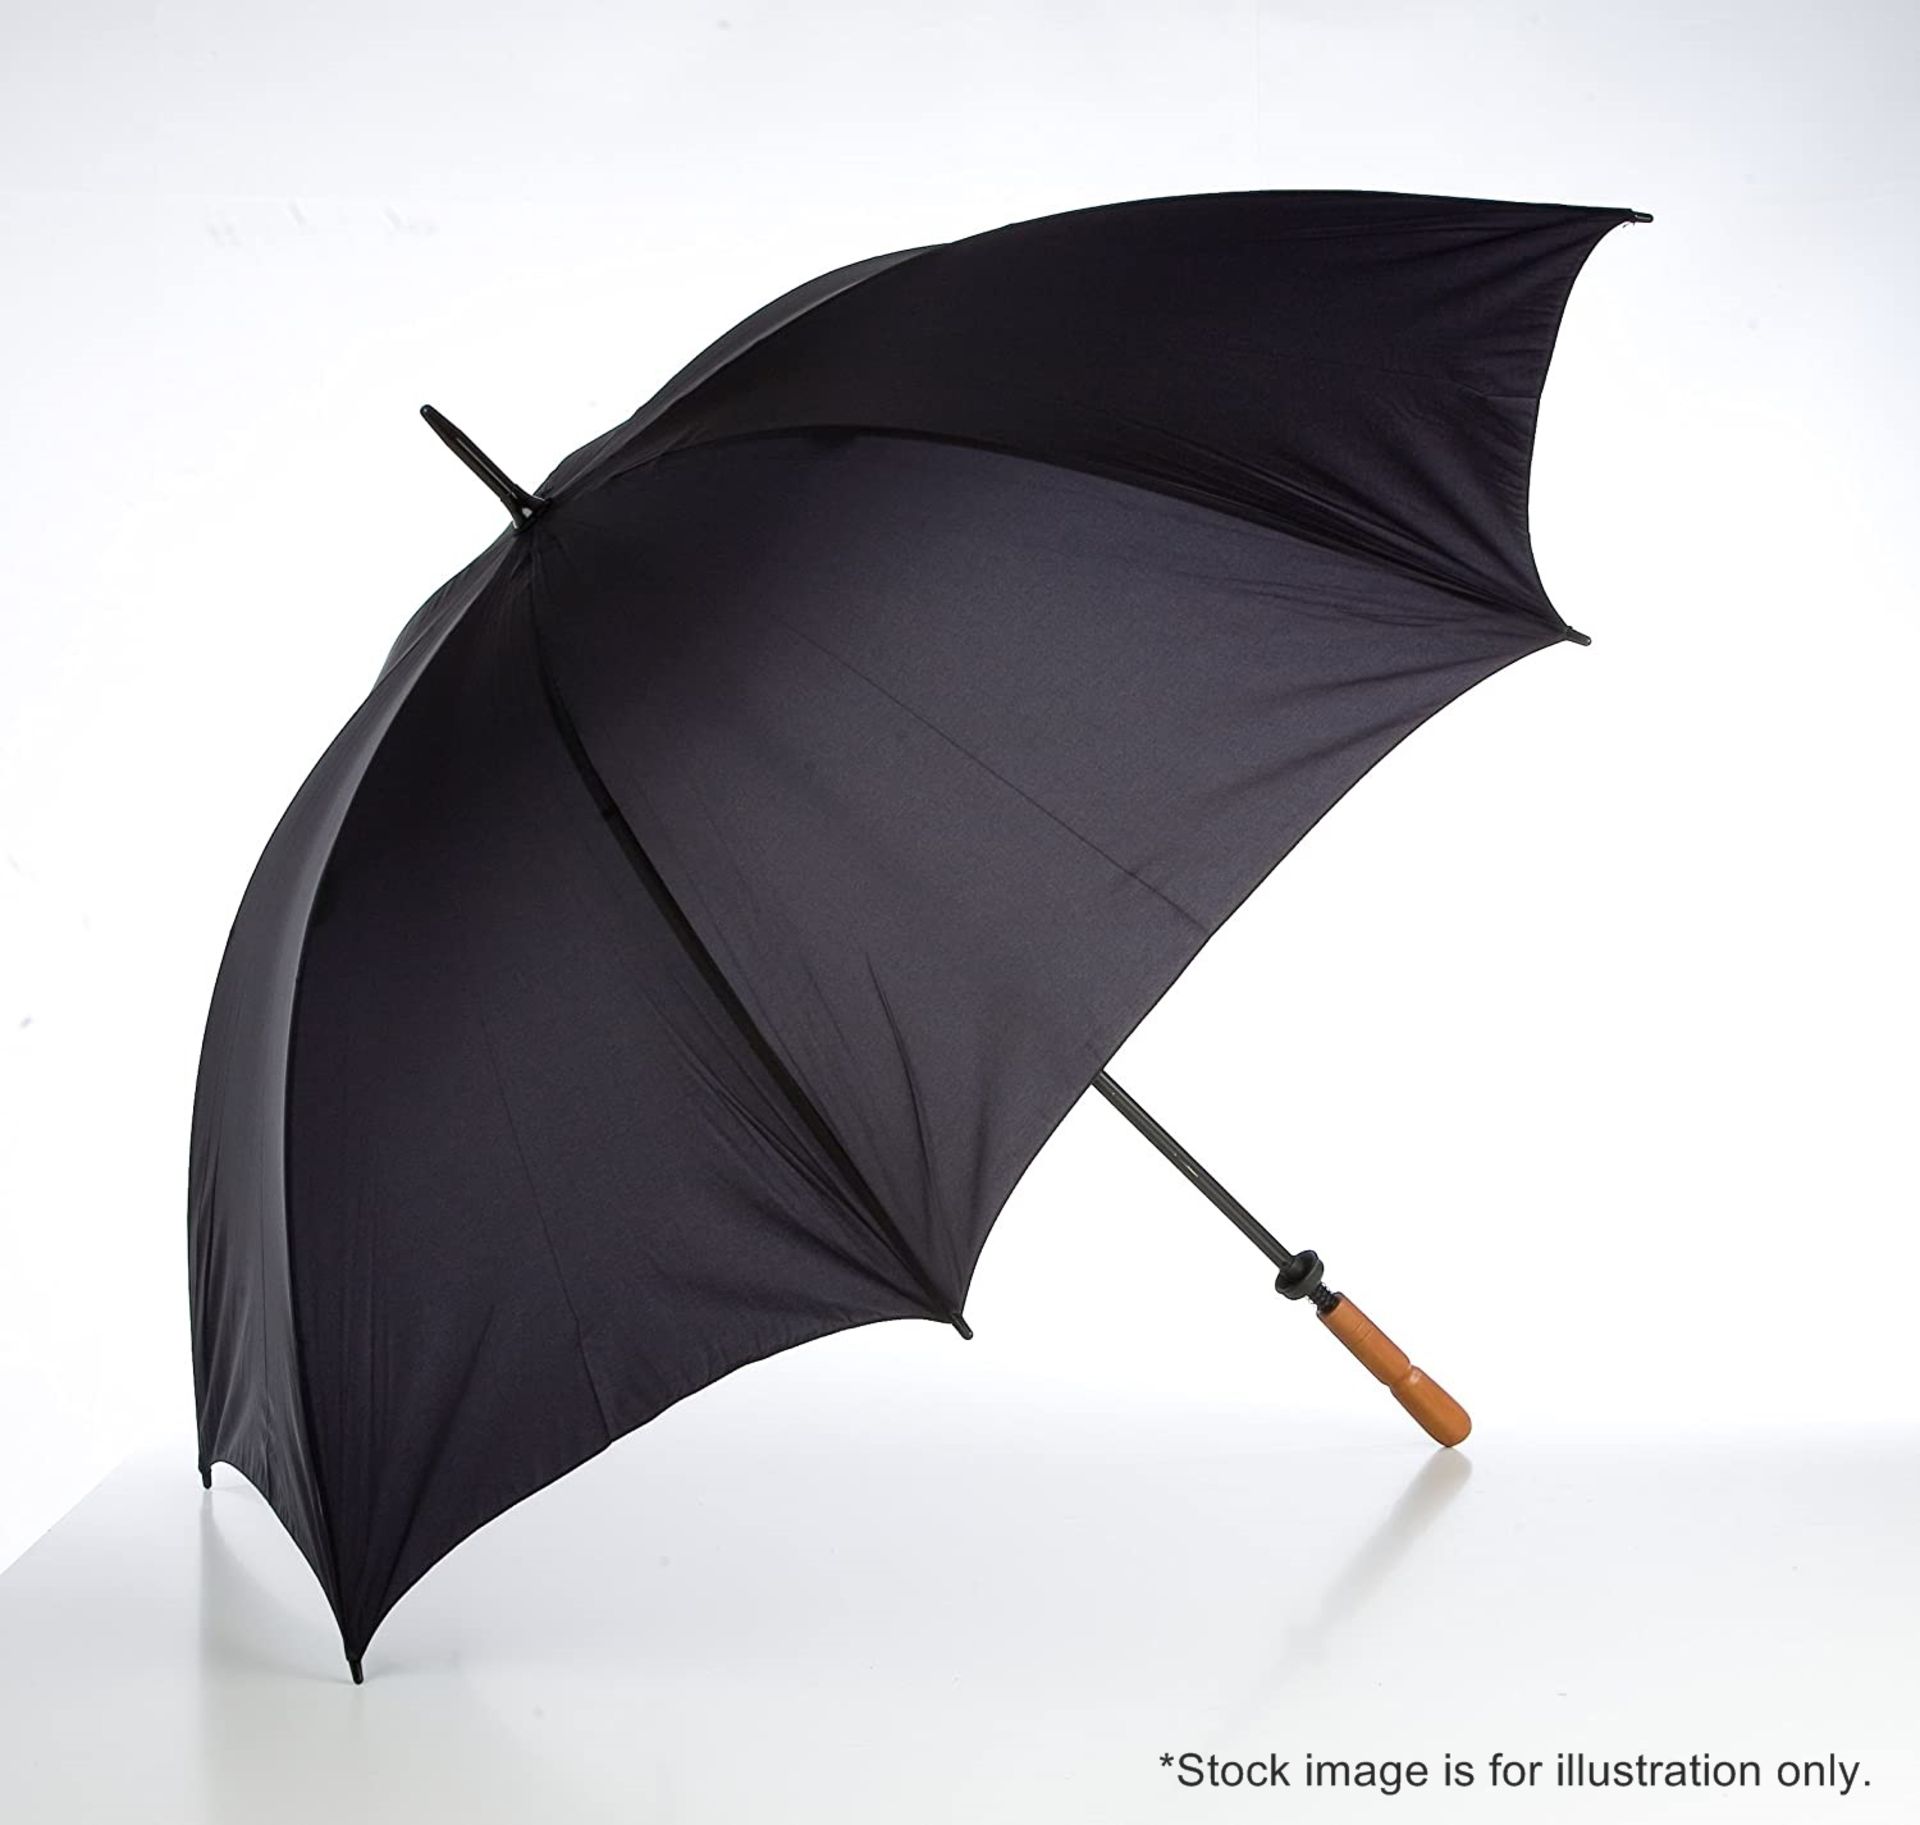 24 x Proline Golf Umbrellas - Colour: Plain Black - Brand New Sealed Stock - Dimensions: Length